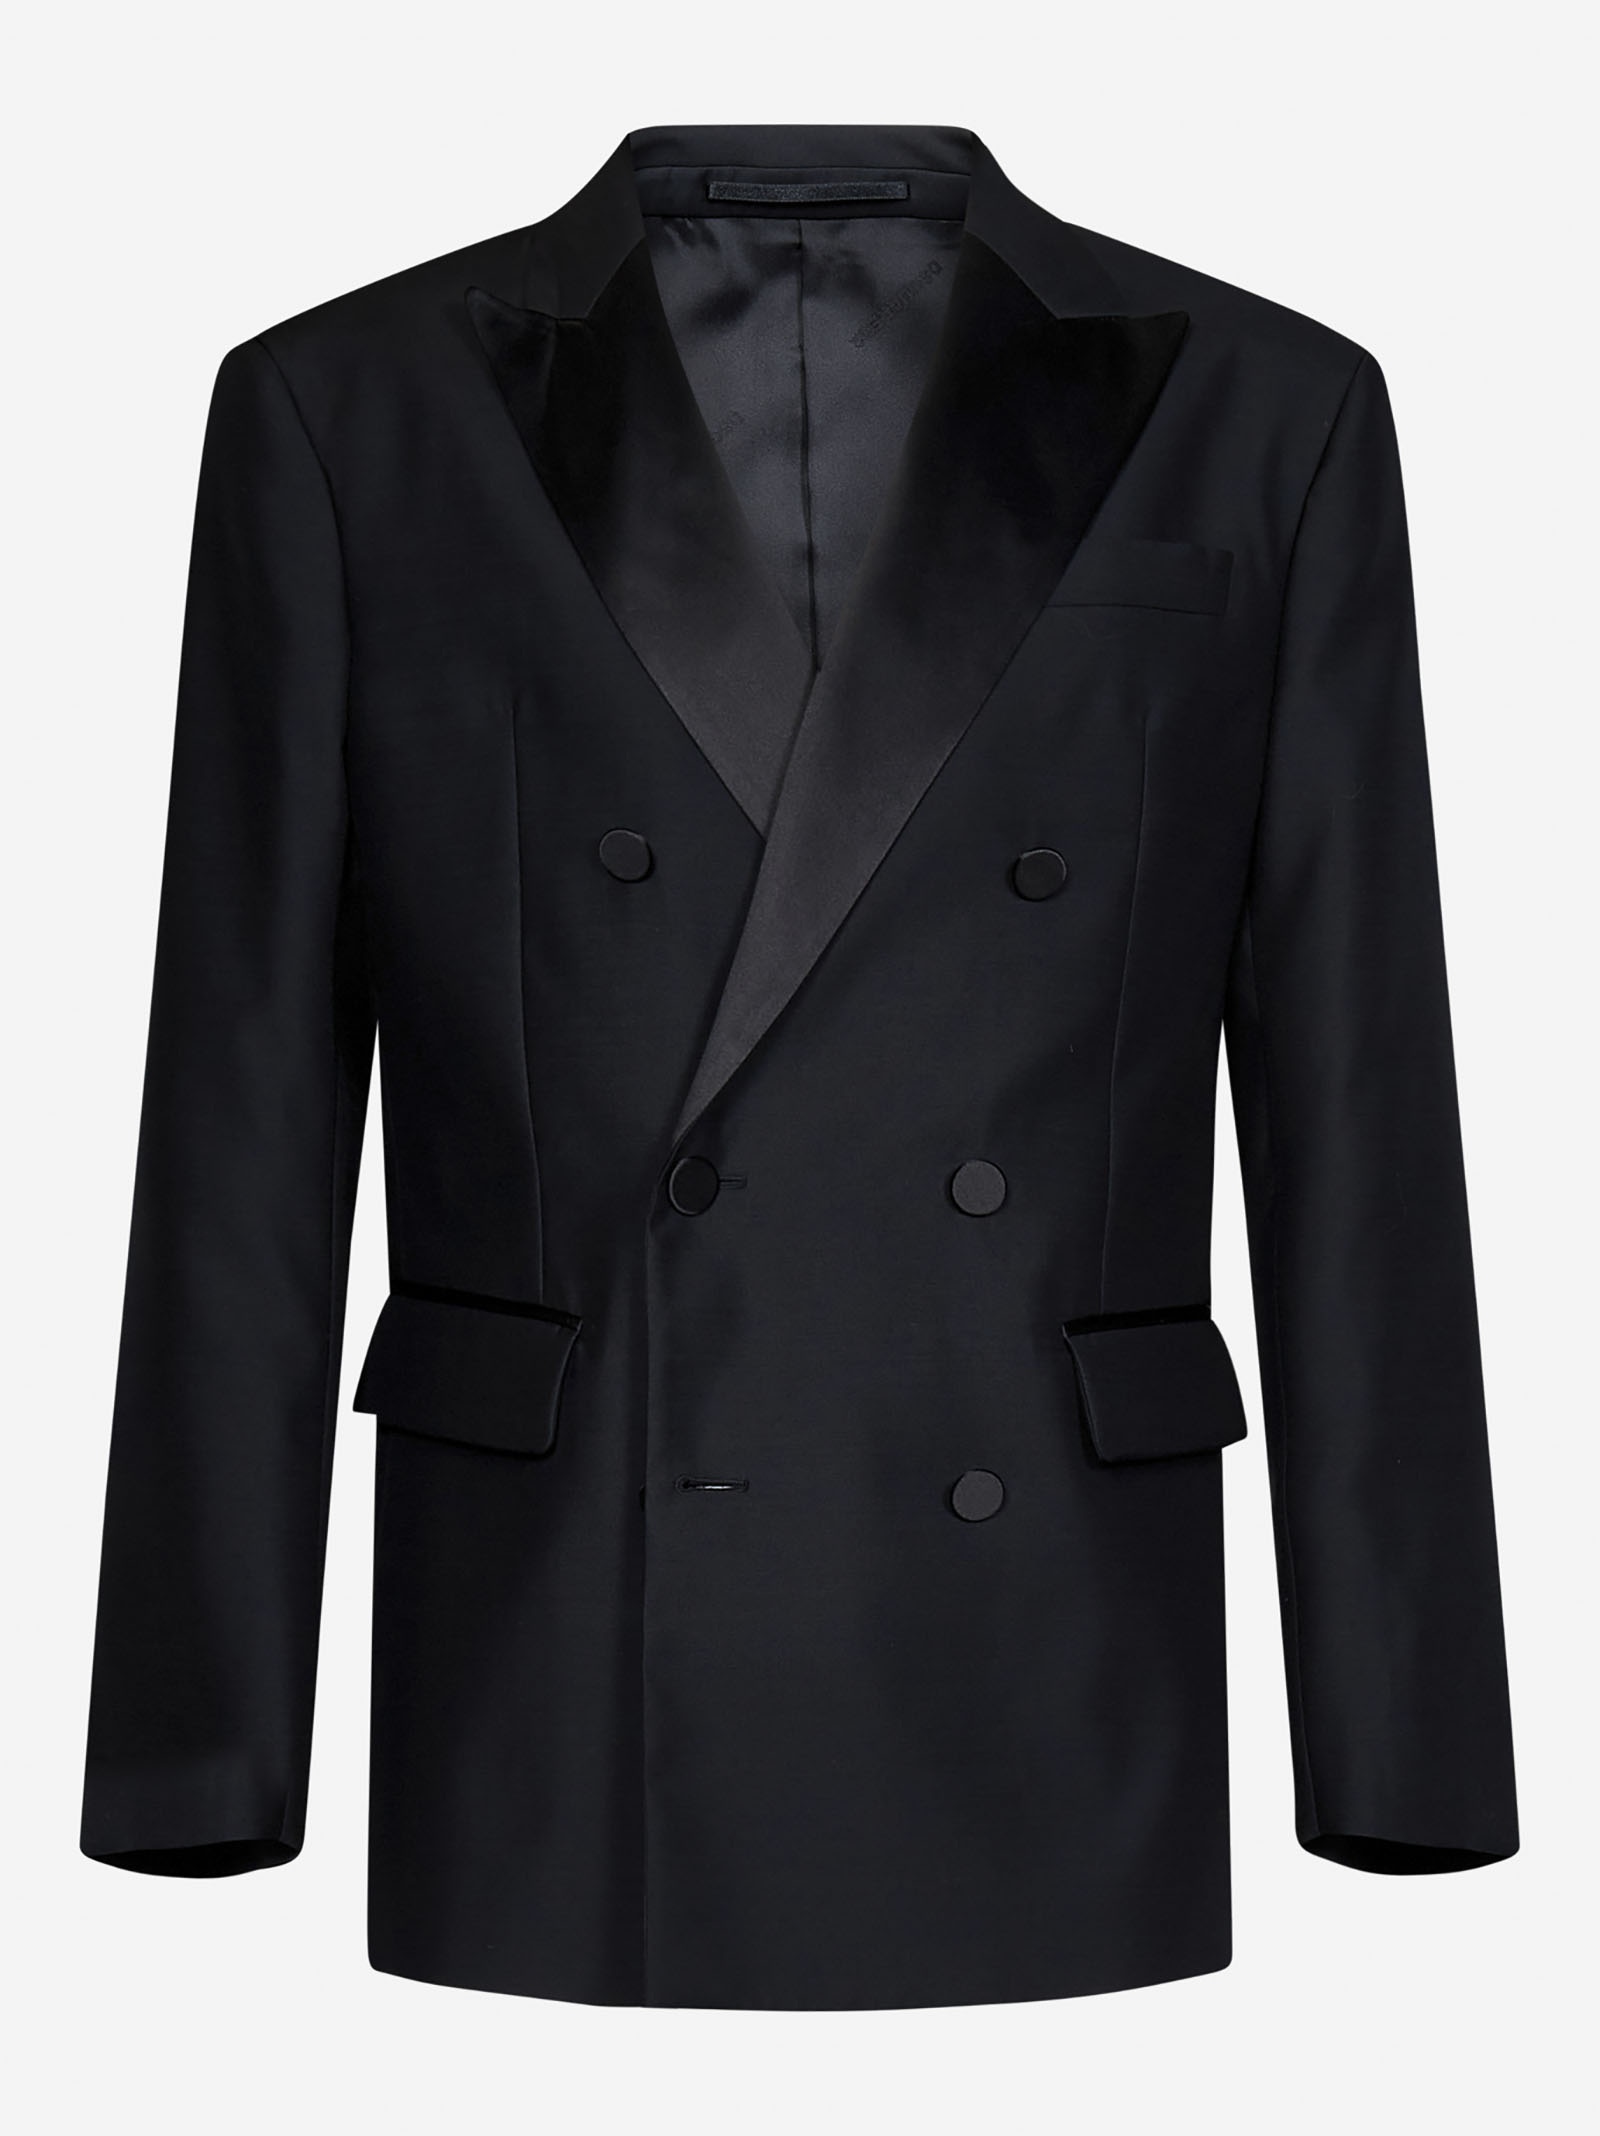 Black wool and silk smoking suit - 2